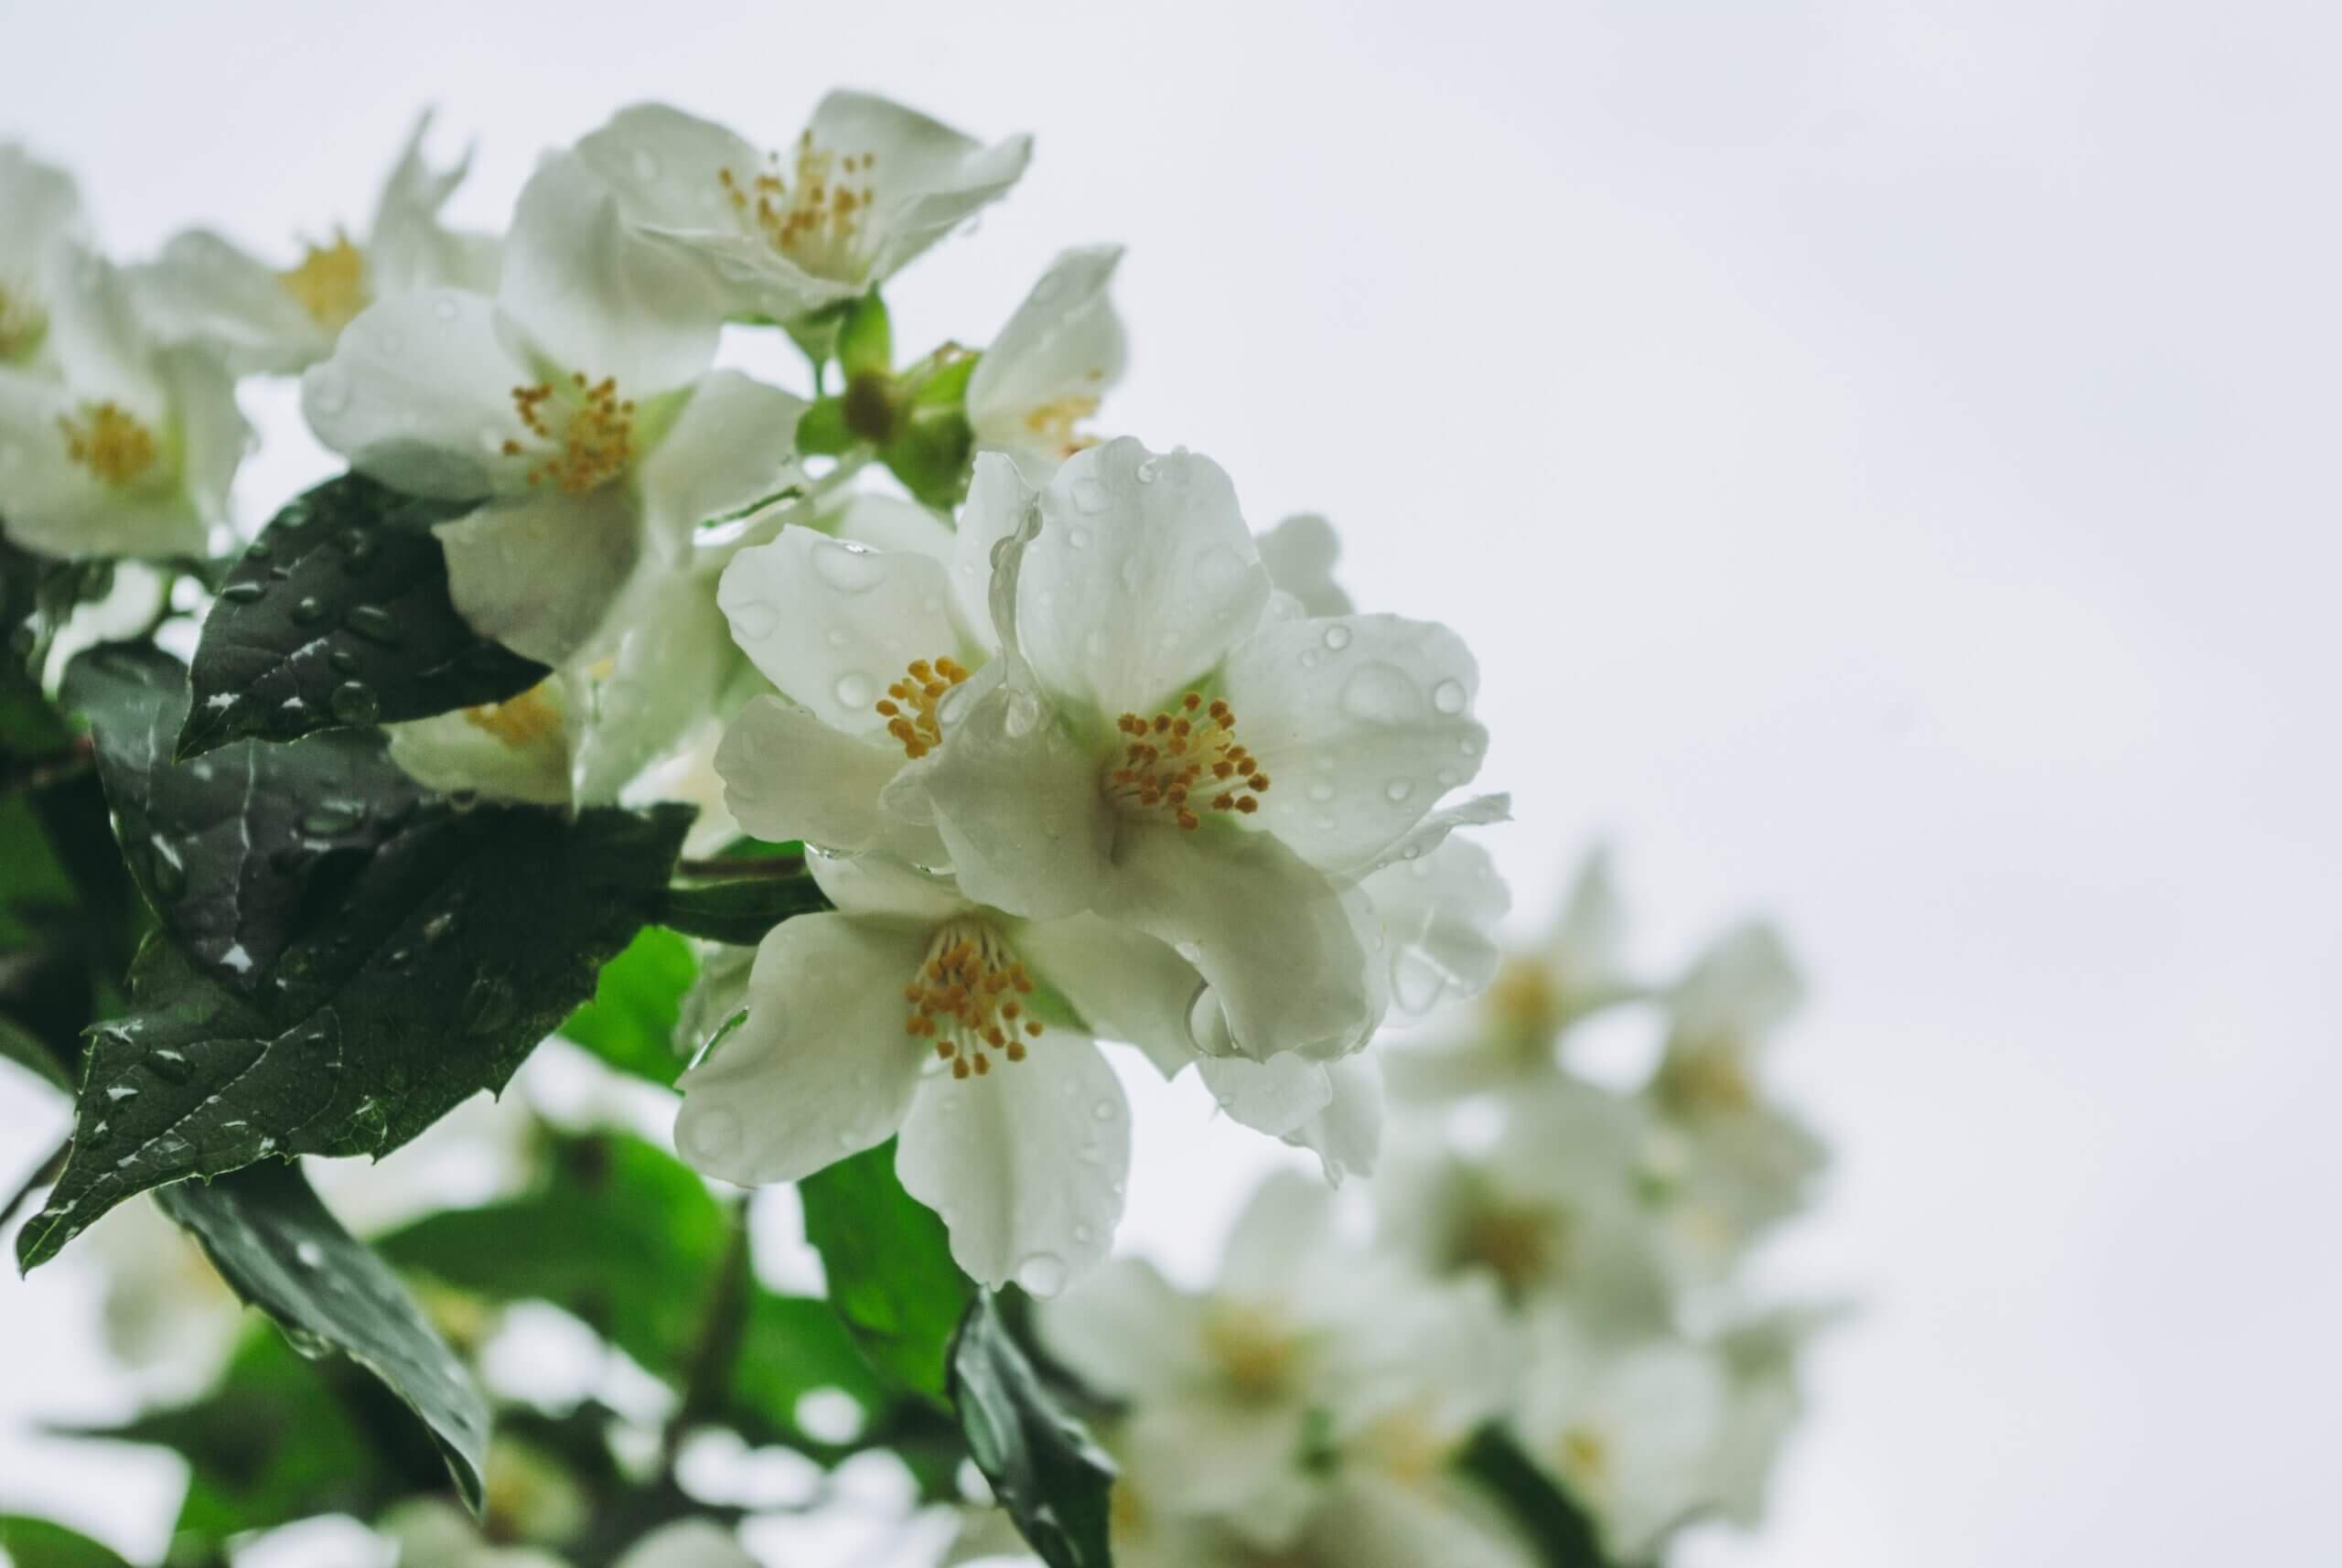 White tree blossoms